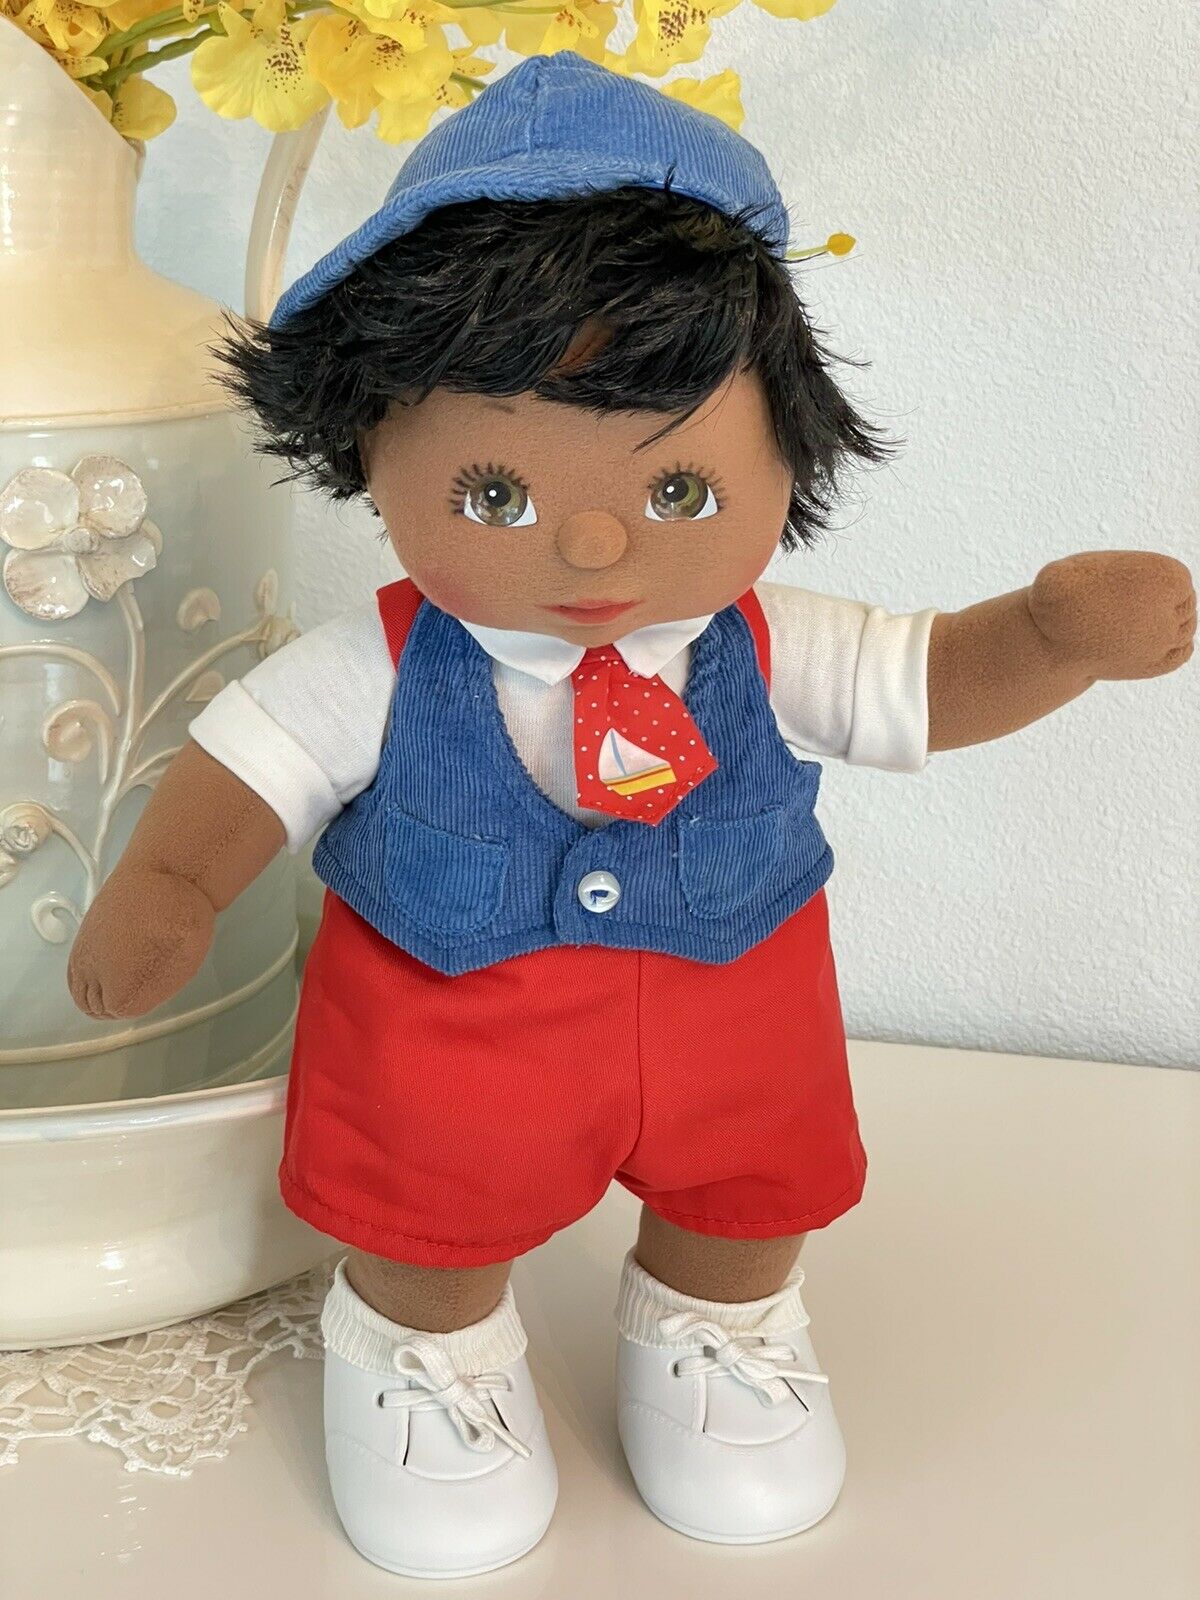 1986 Mattel My Child Doll African-american Boy Restored & Full Original Outfit